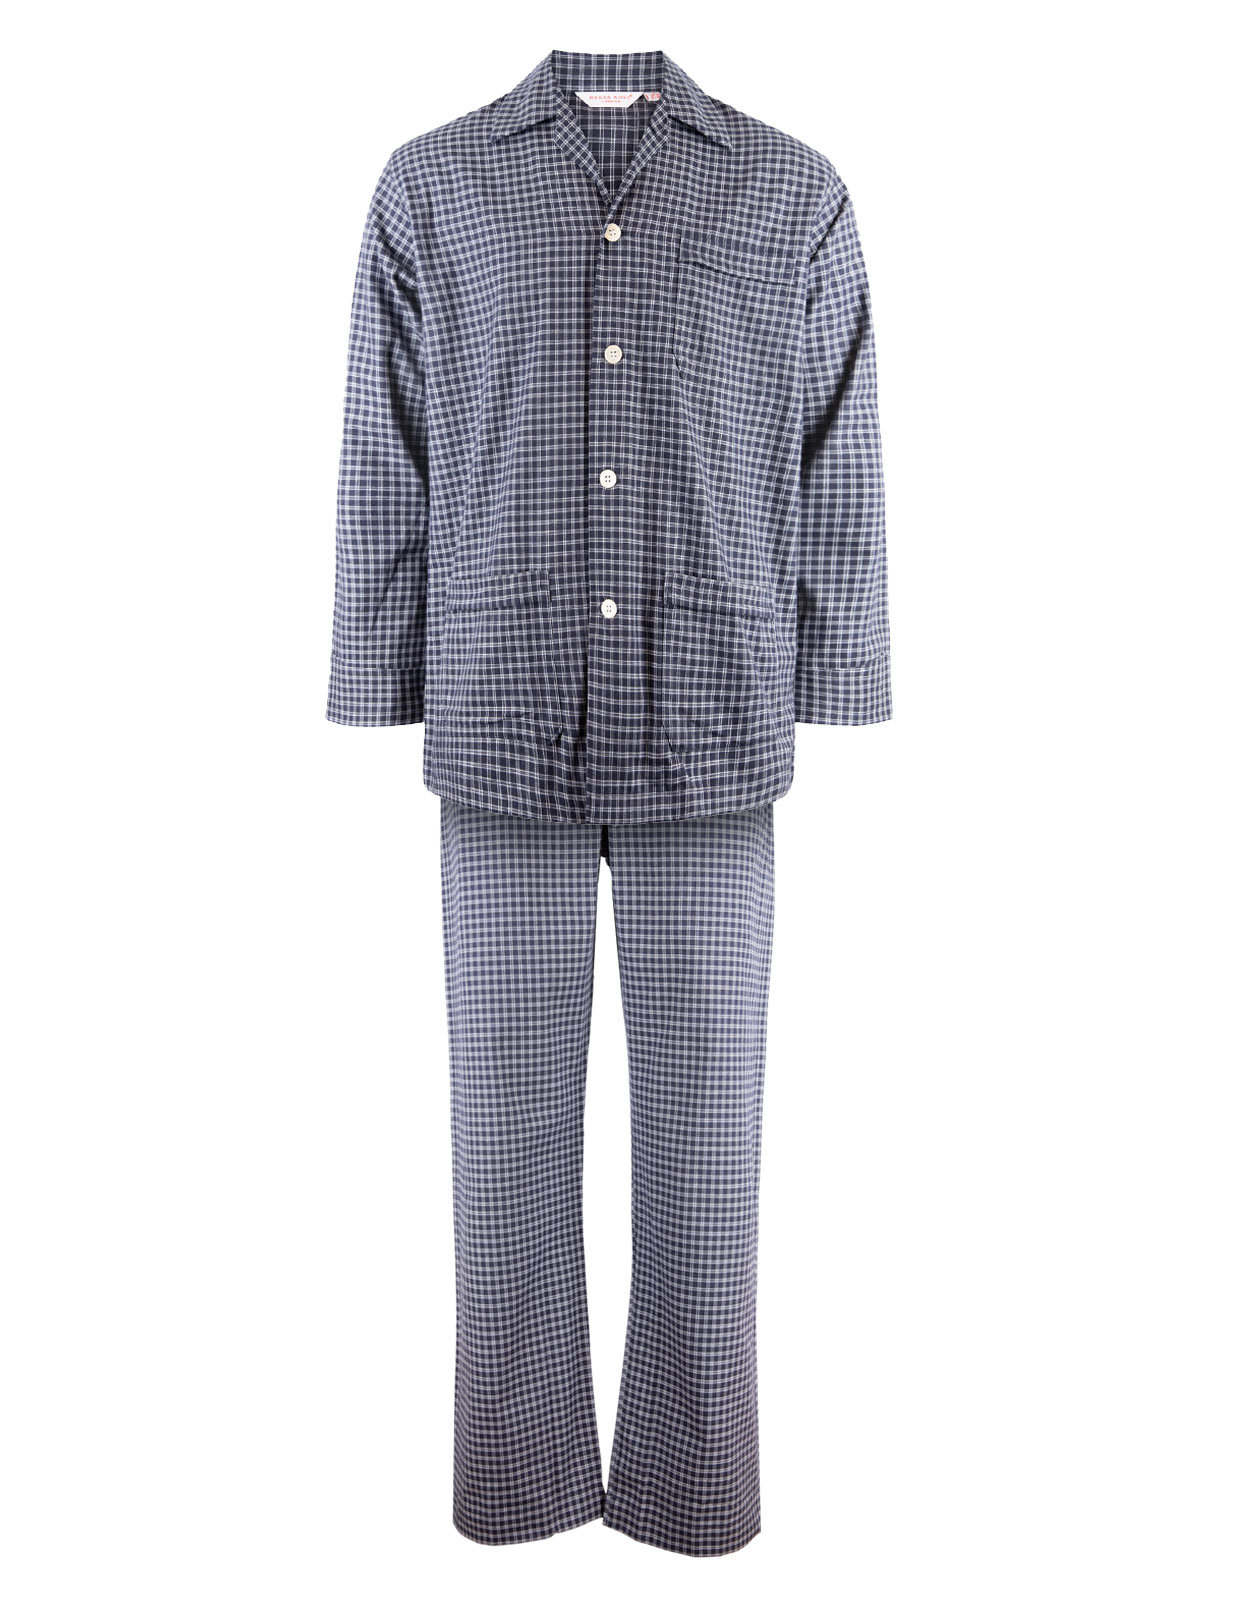 Braemar Flannel Pyjama Set Navy/White Check